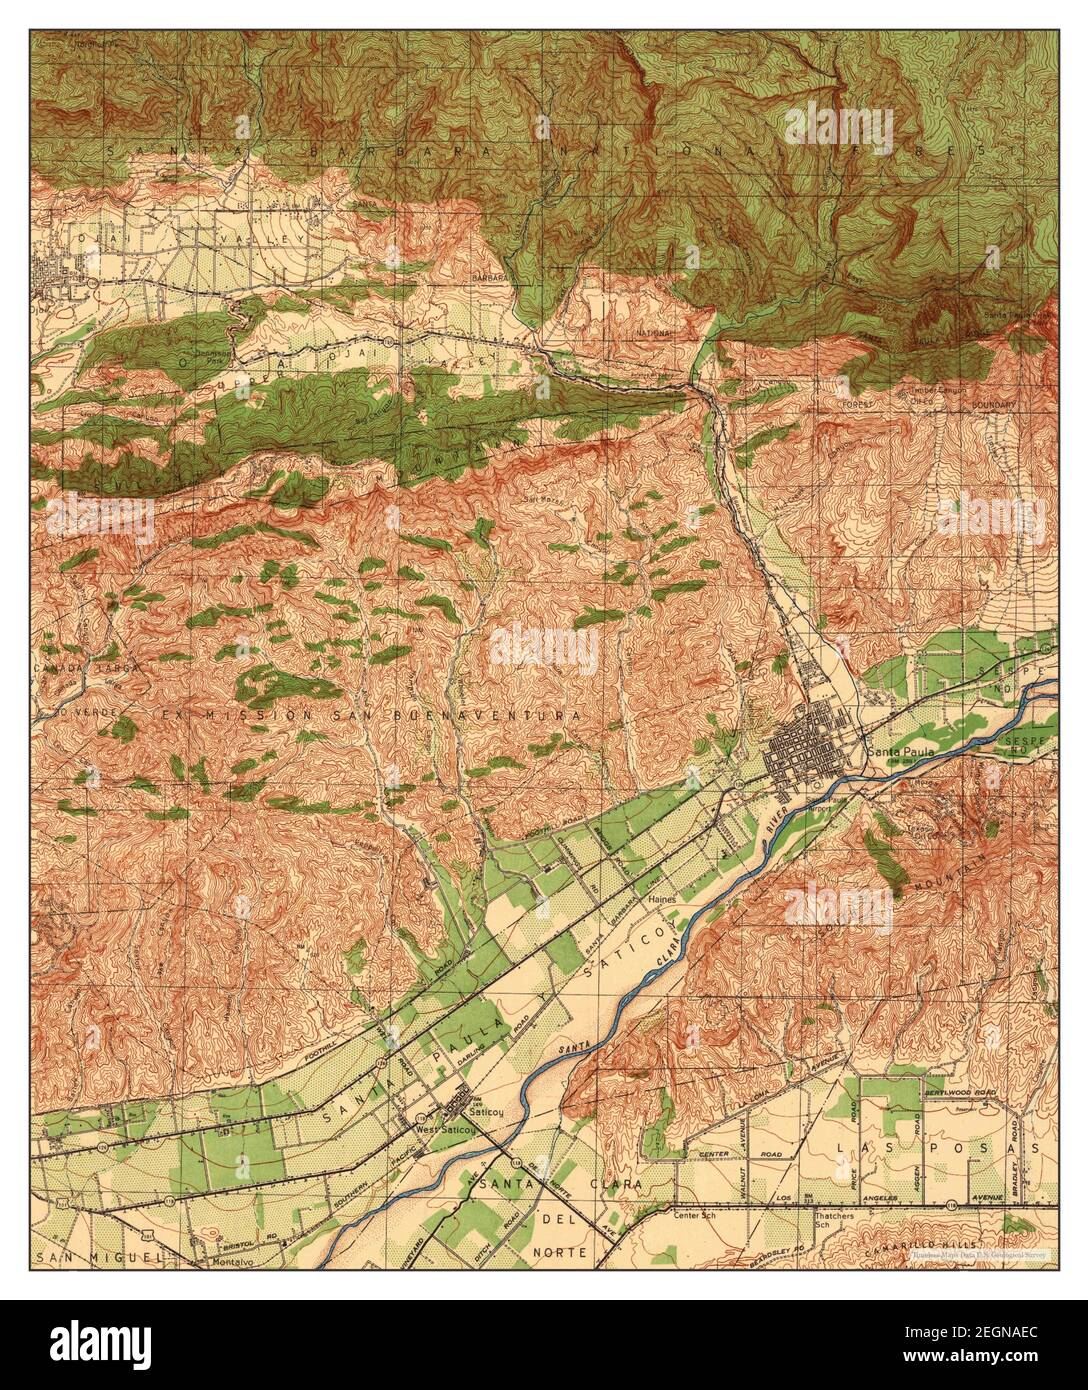 Santa Paula, California, map 1942, 1:62500, United States of America by Timeless Maps, data U.S. Geological Survey Stock Photo